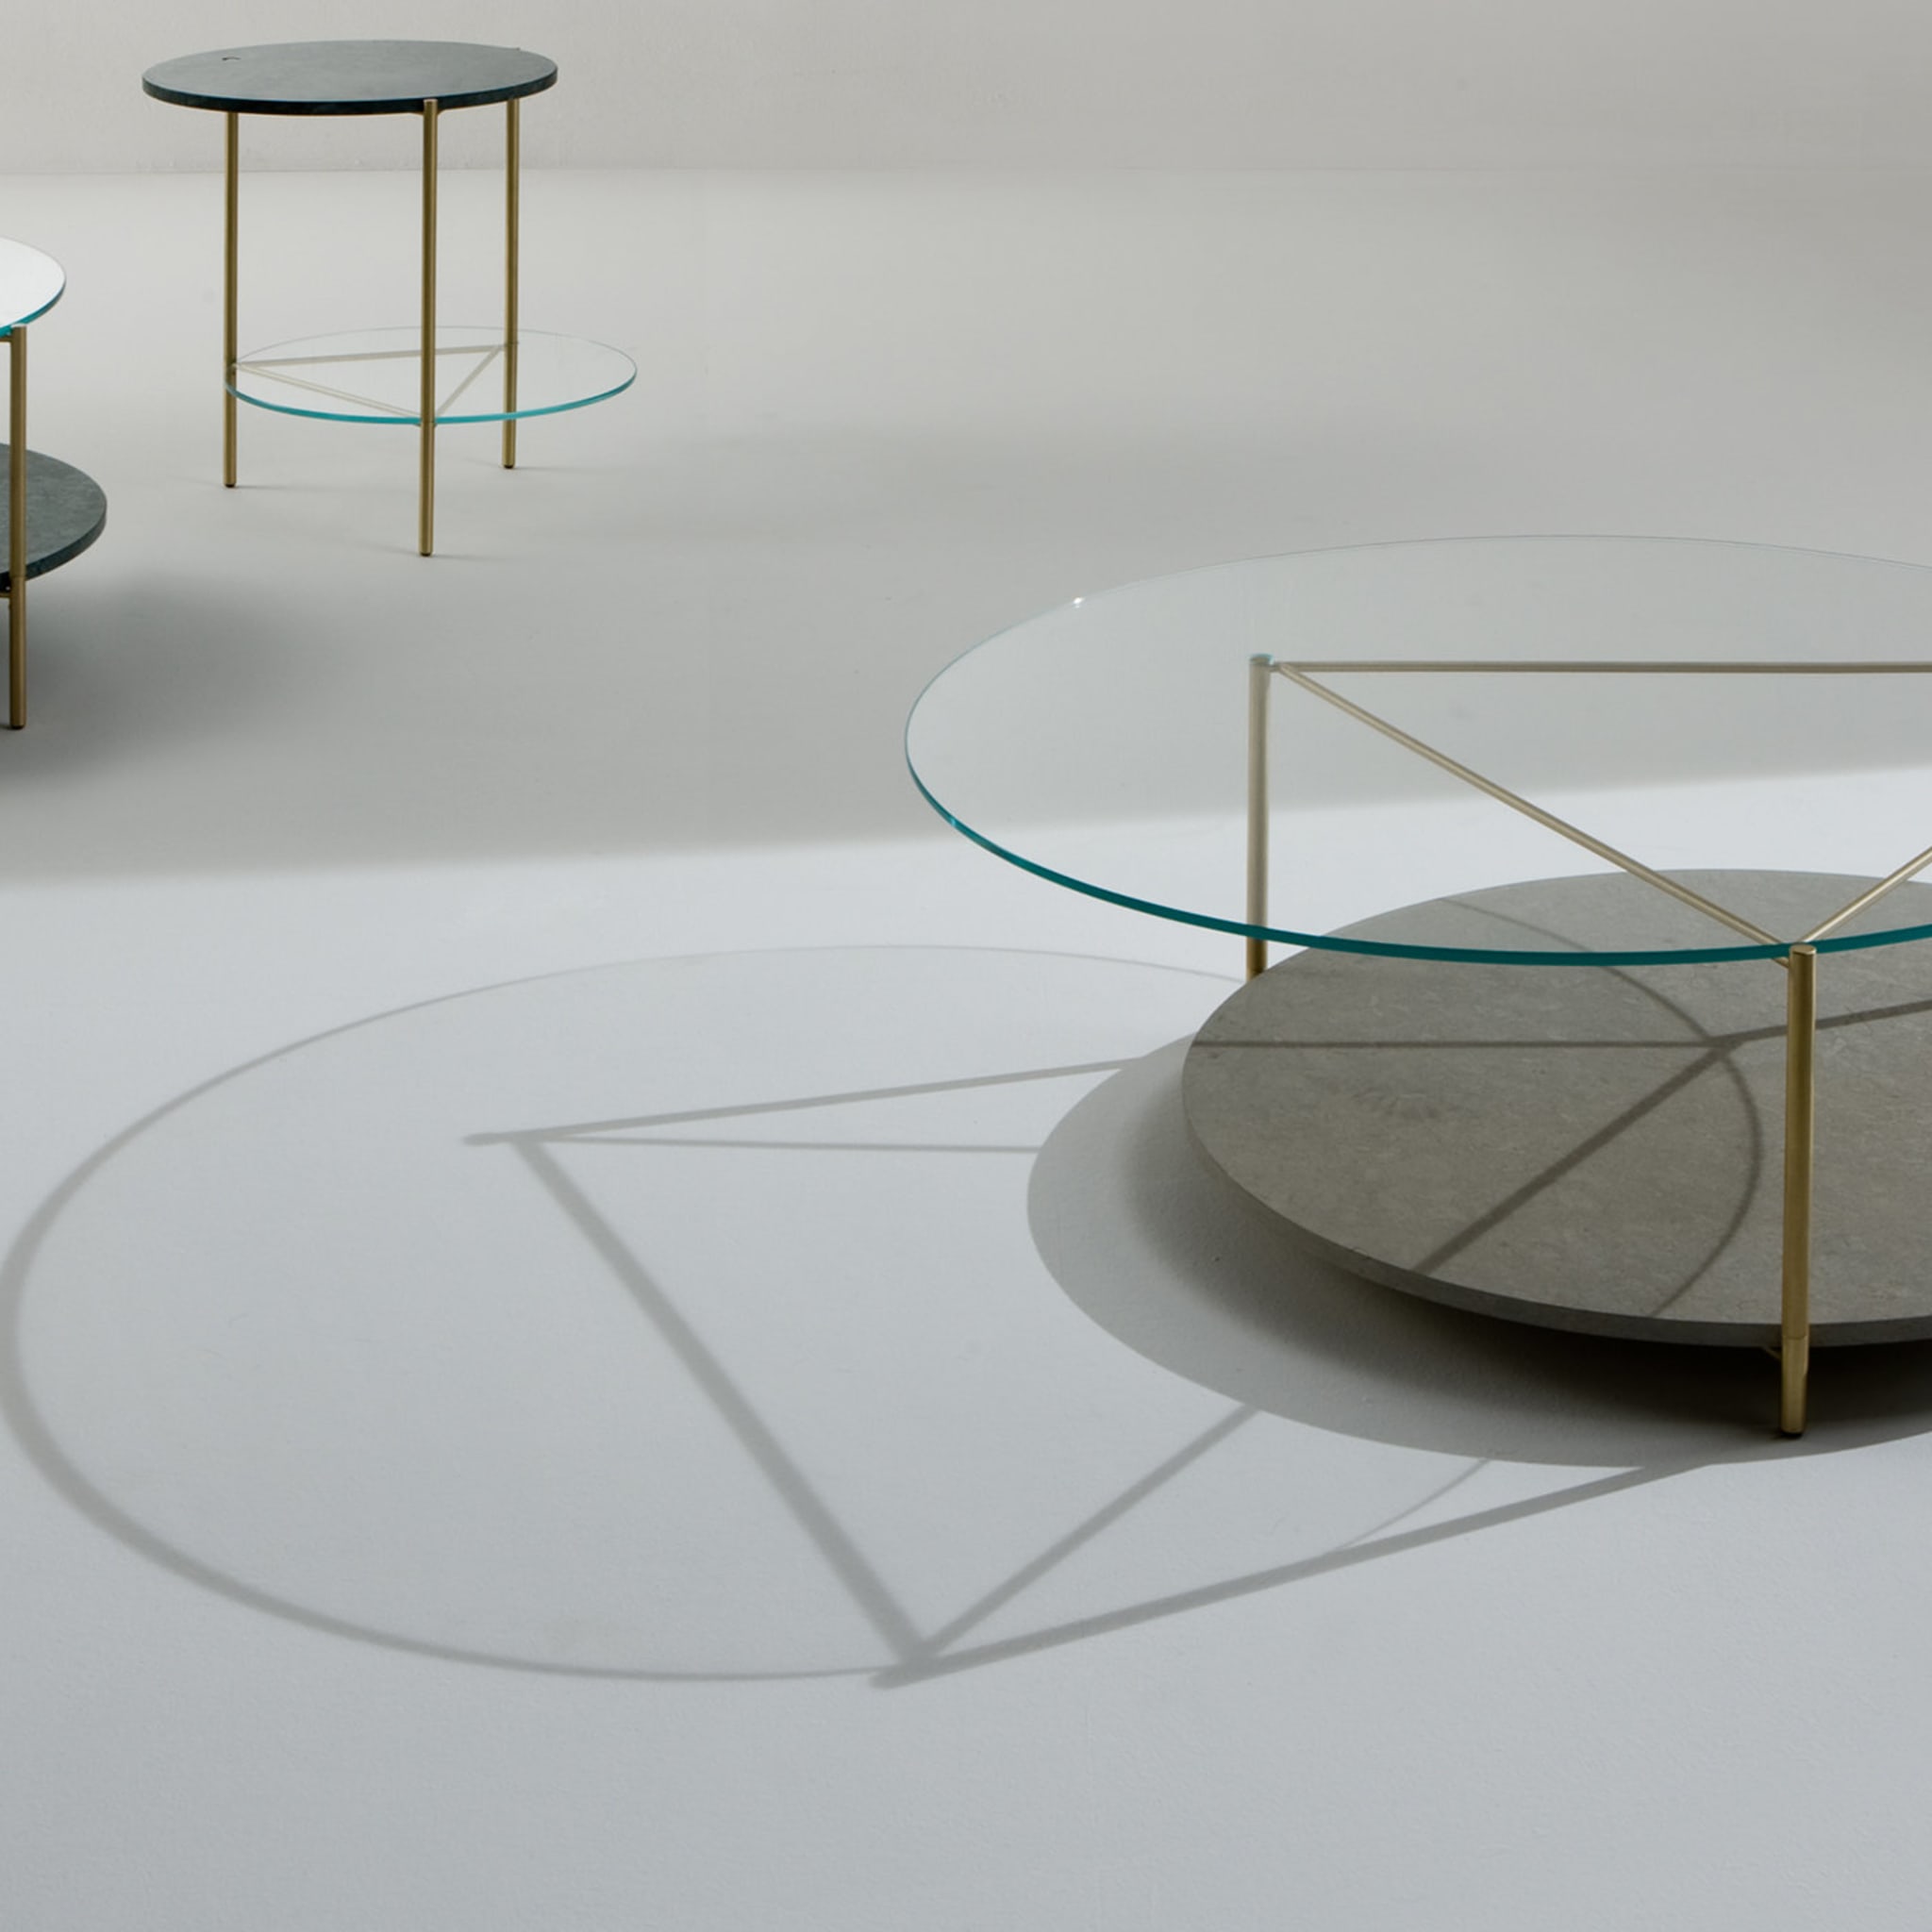 Echo Coffee Table by Bartoli Design - Alternative view 1